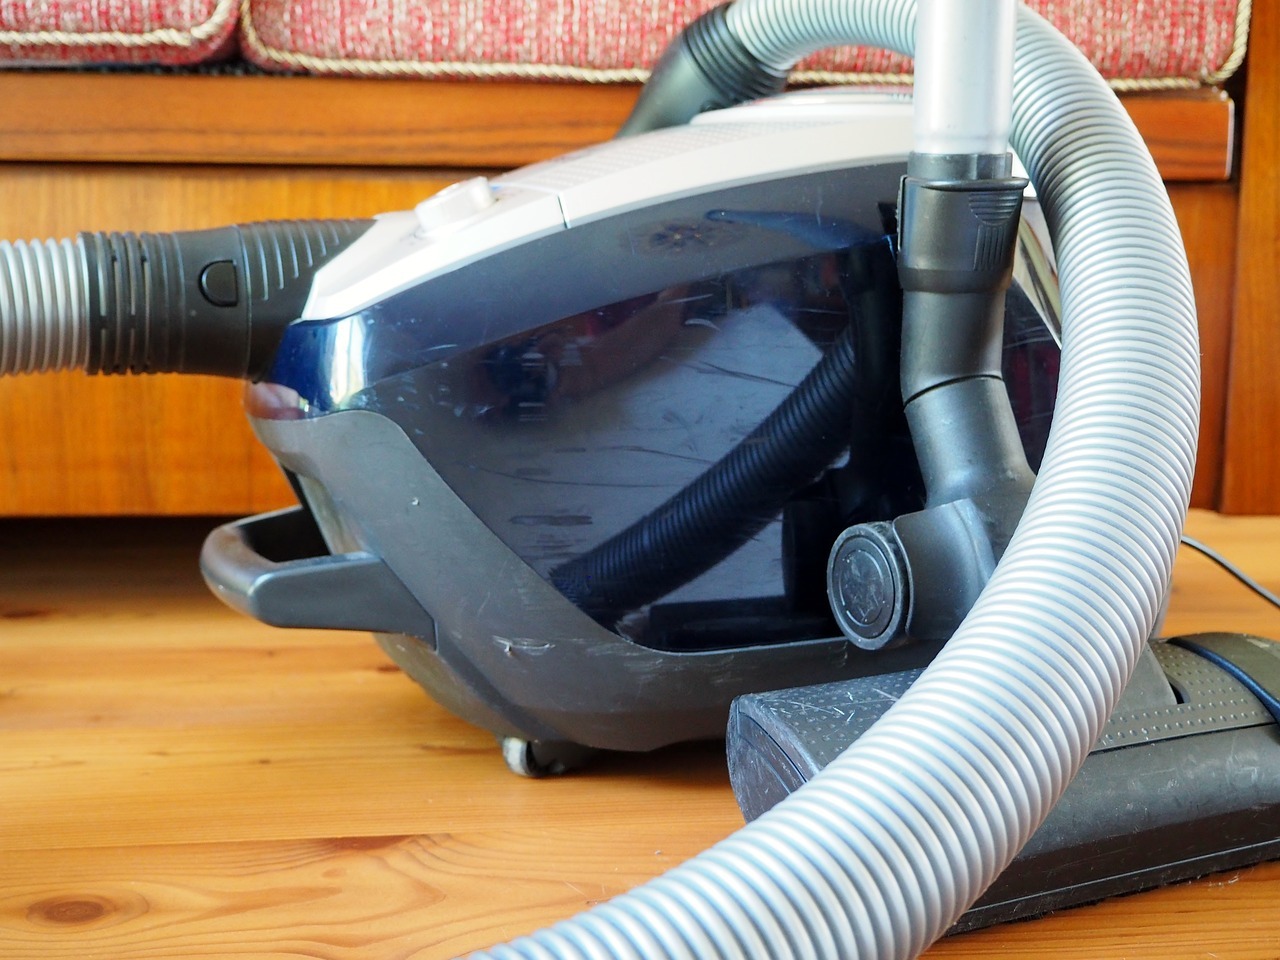 The design of vacuum cleaners